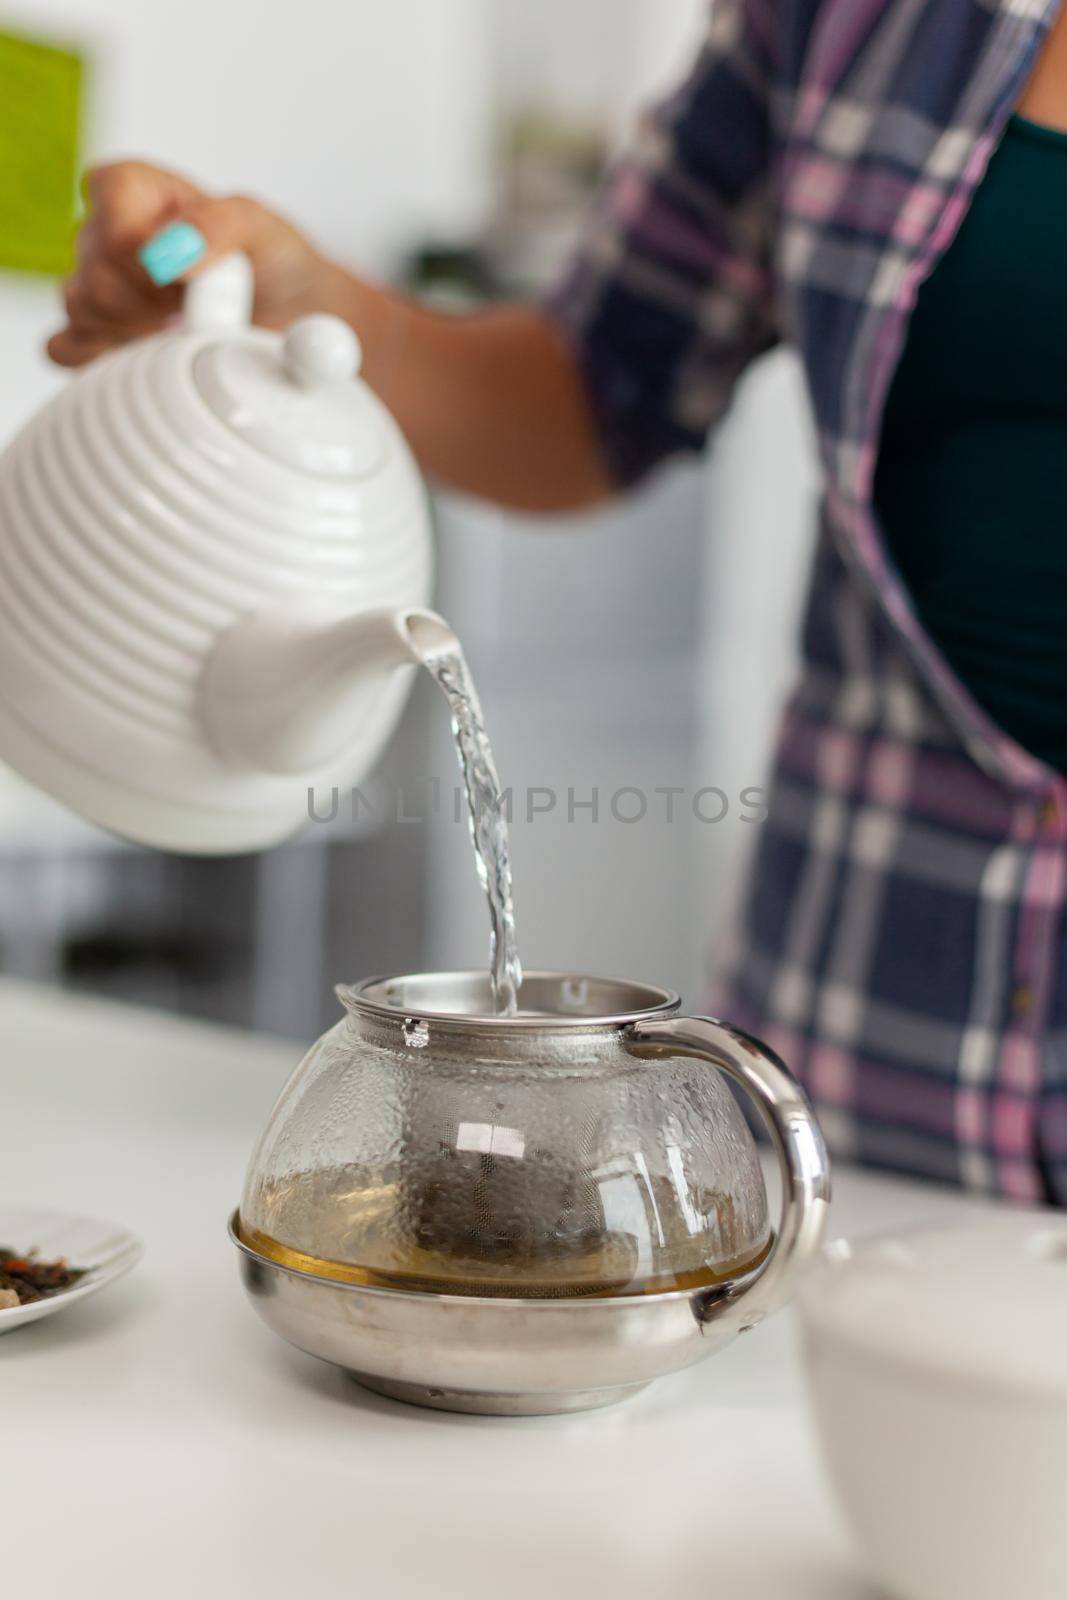 Lady making hot tea by DCStudio